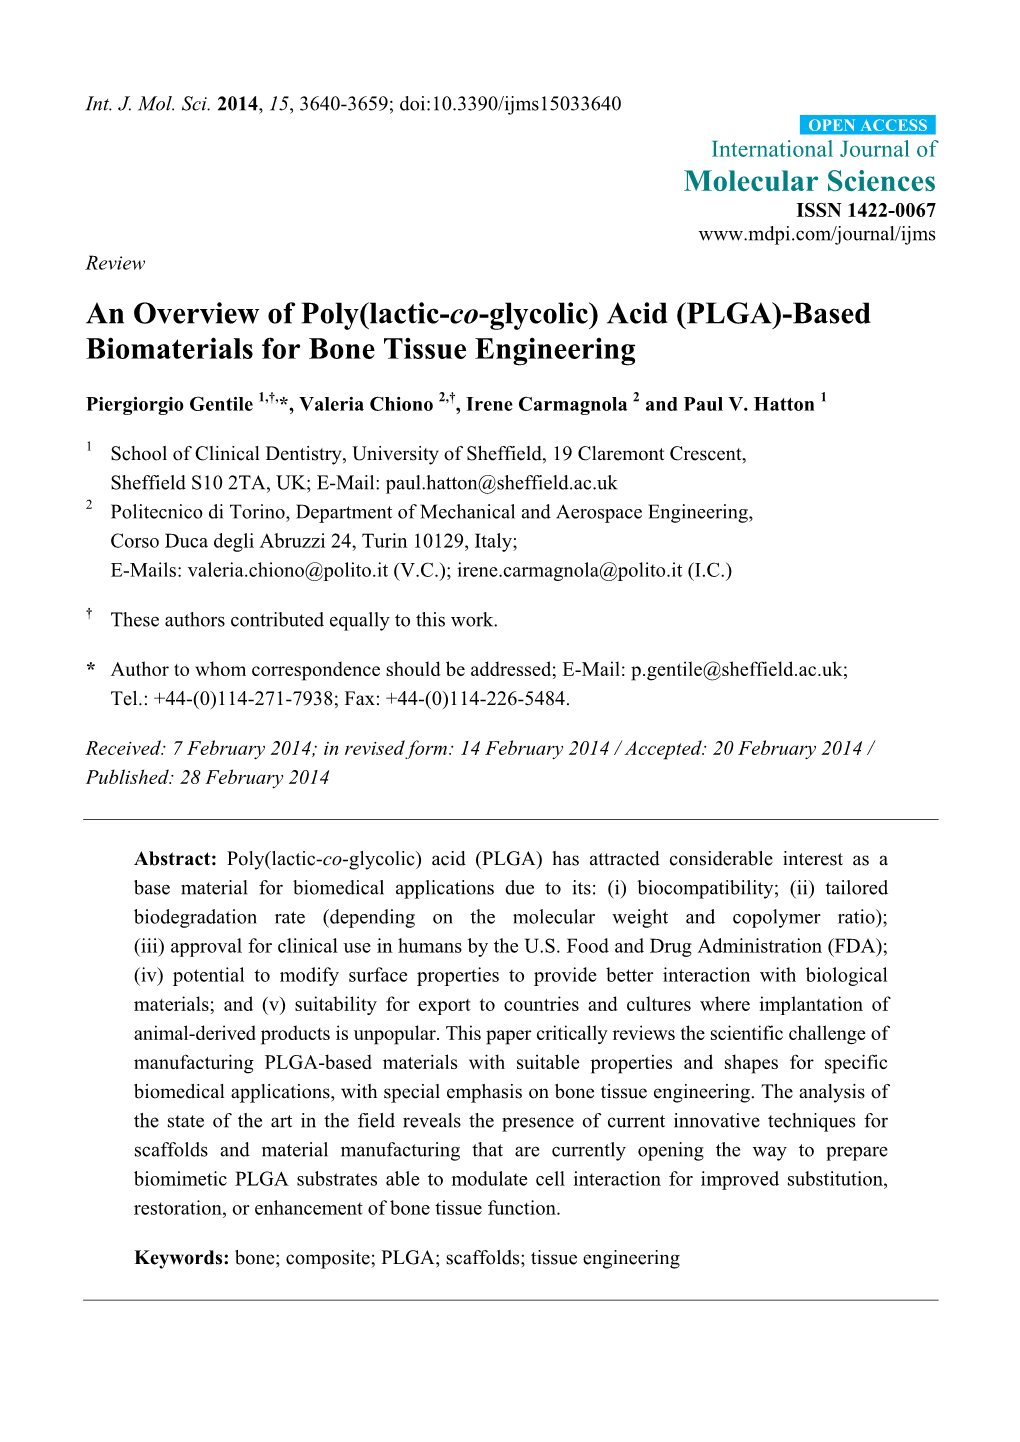 PLGA)-Based Biomaterials for Bone Tissue Engineering